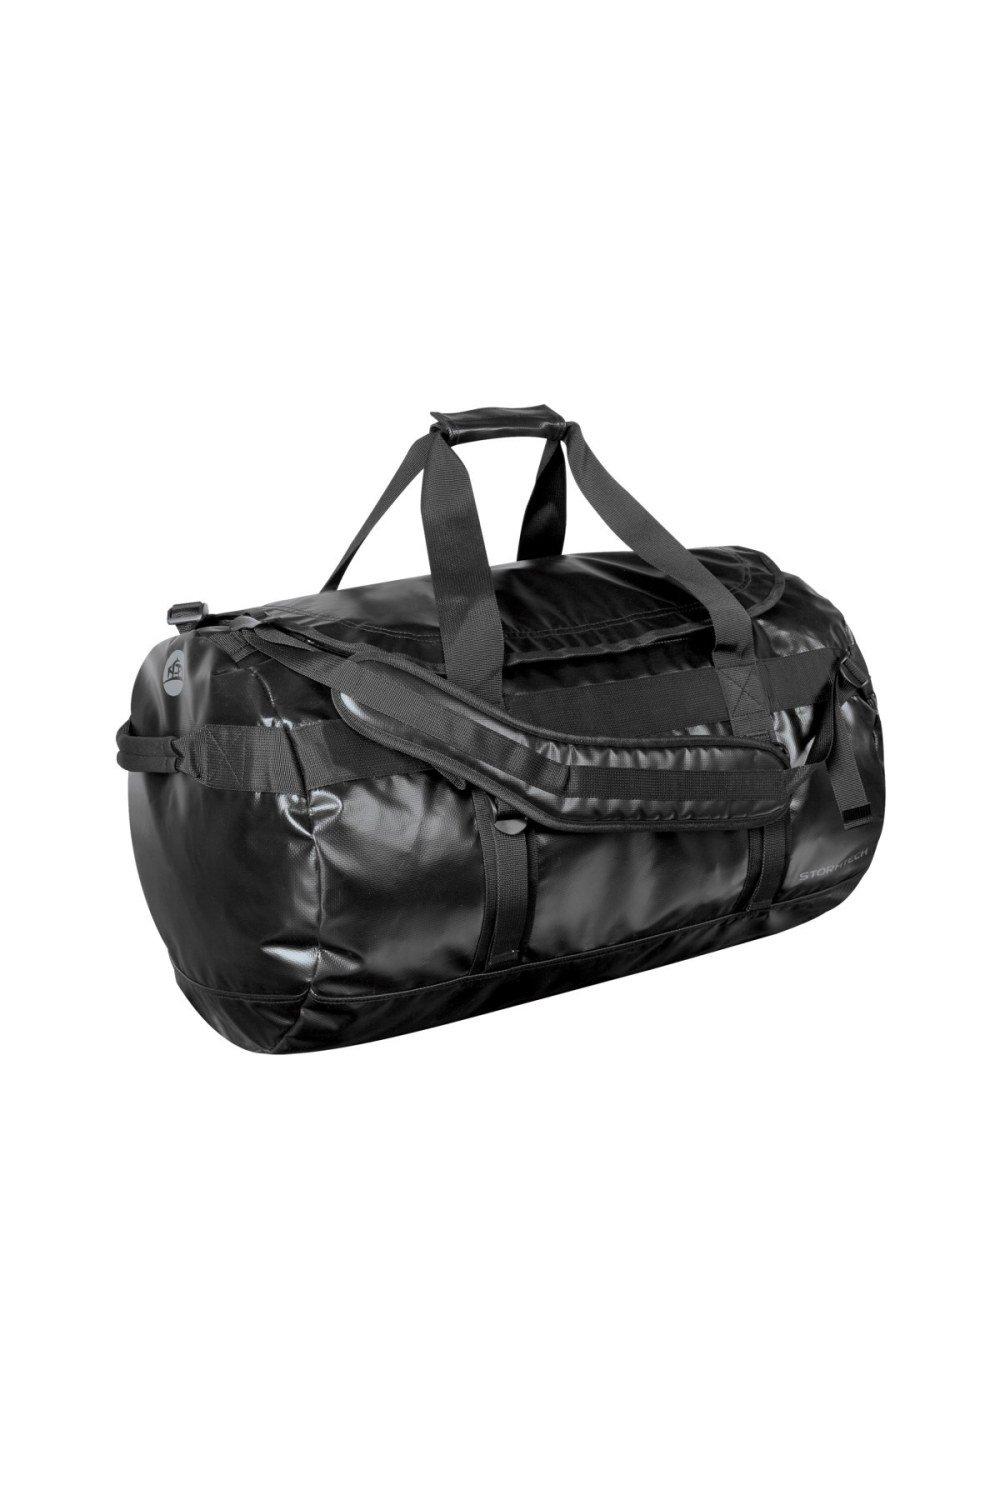 Waterproof Gear Holdall Bag (Medium)